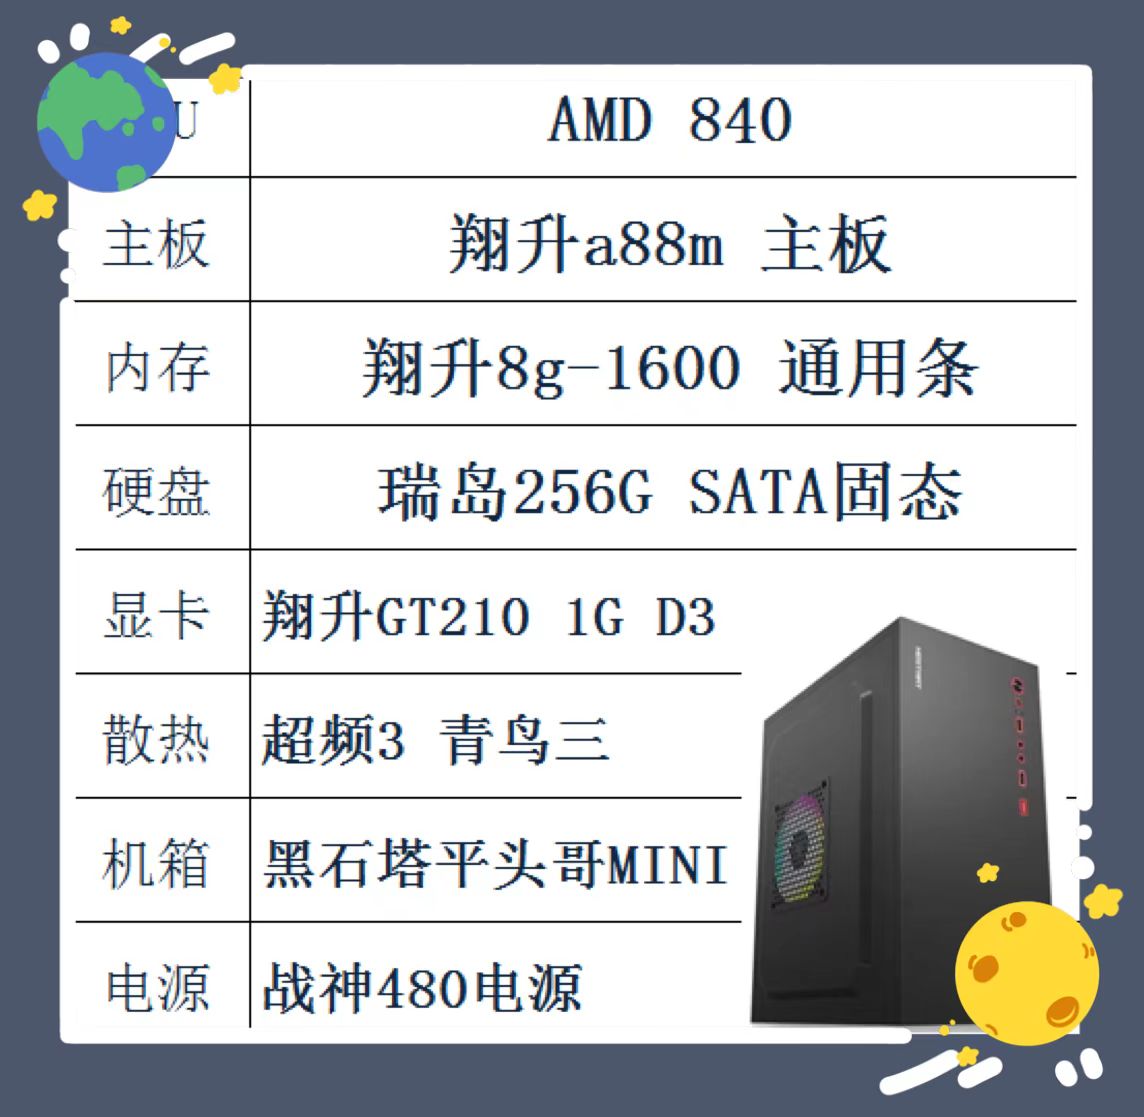 AMD 840 翔升a88m 主板 8g-1600内存 256G固态 黑石塔MINI机箱